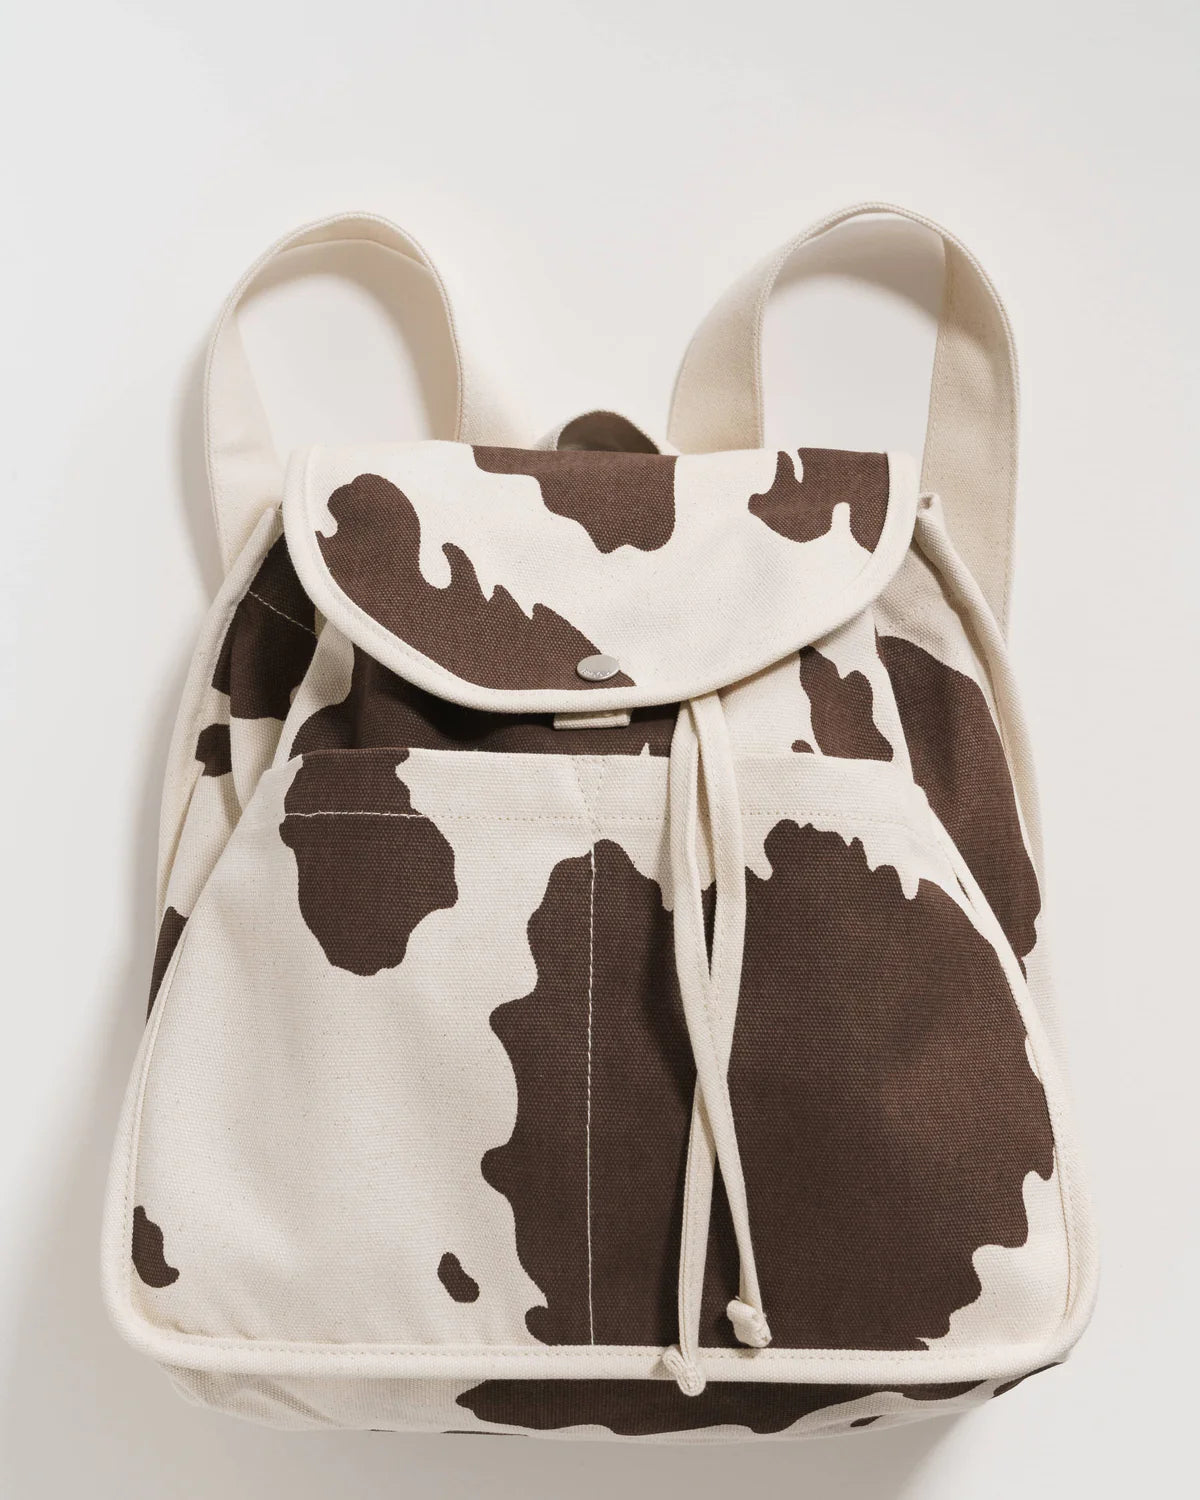 Baggu Canvas Drawstring Purse | The Affordable Bag Brand That Should Be on  Your Radar — We'll Take One of Each Please! | POPSUGAR Fashion UK Photo 3